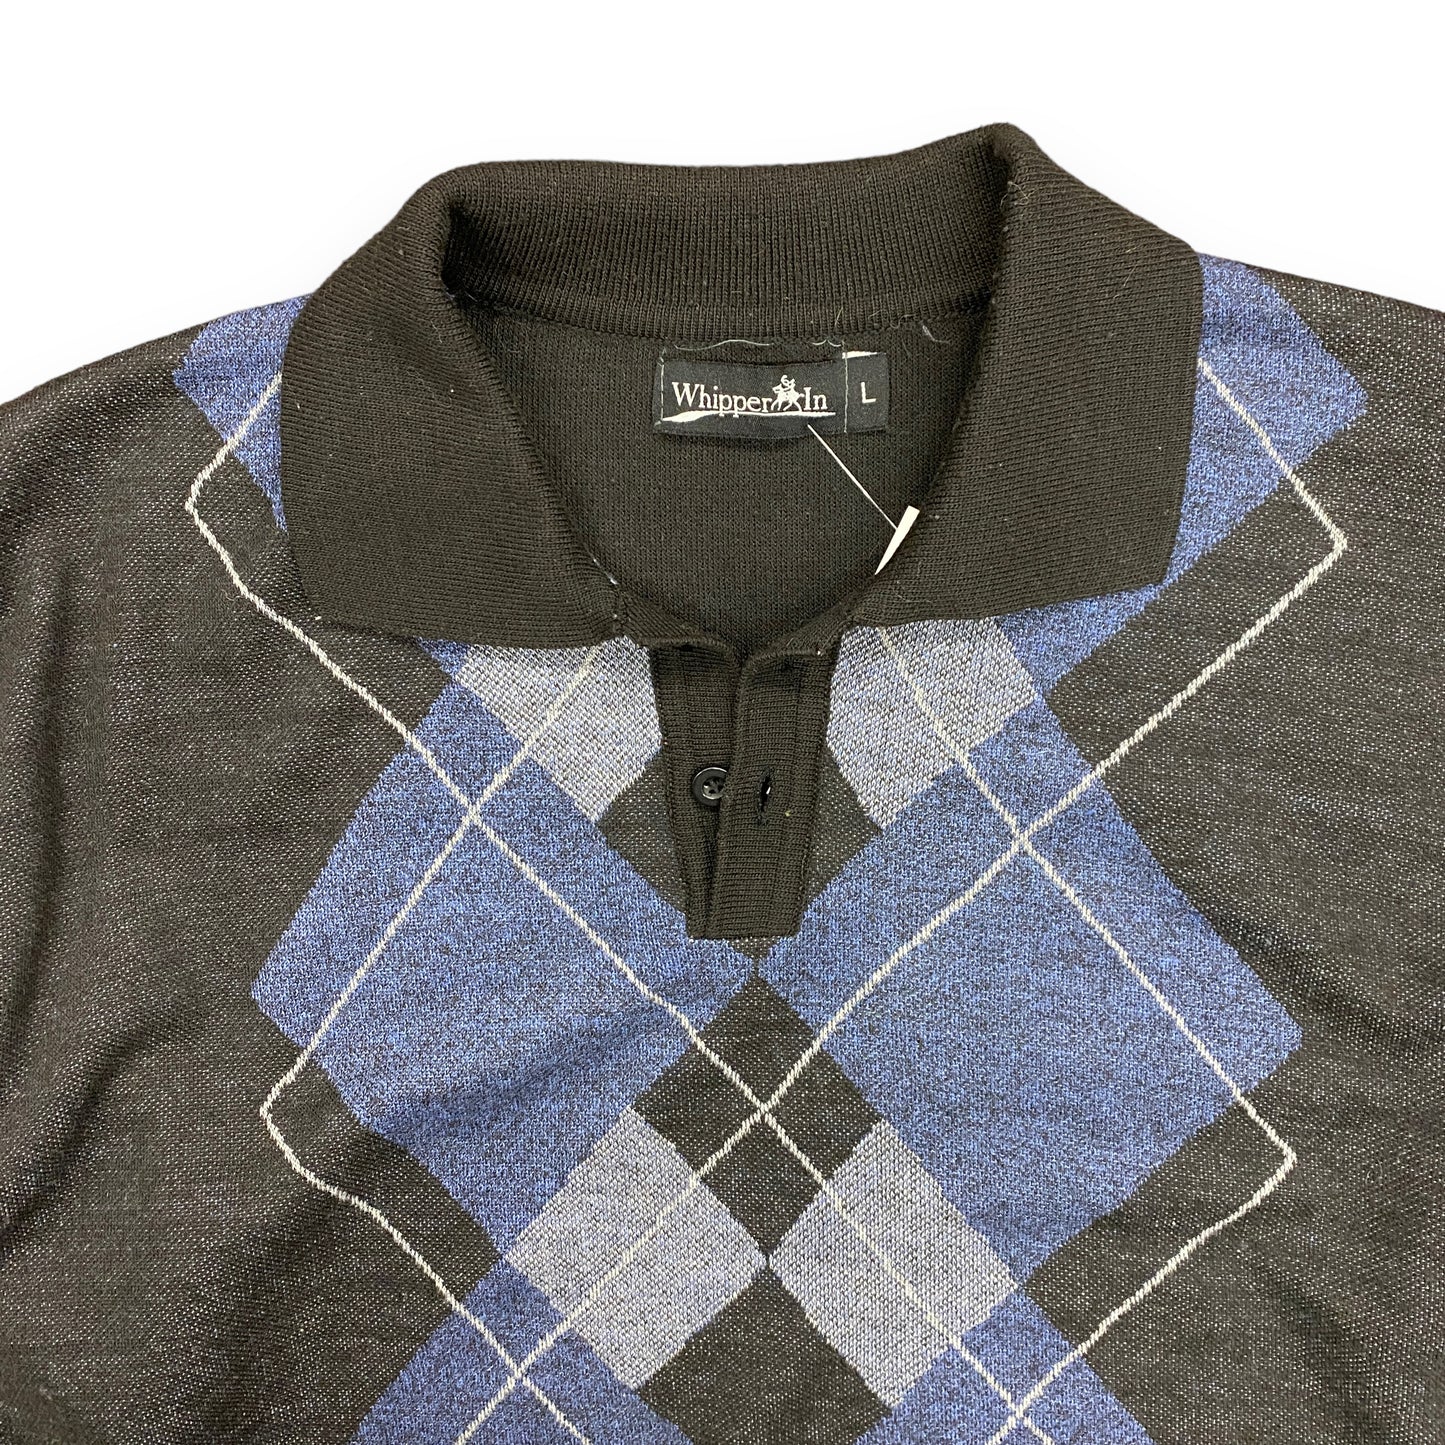 Vintage Black & Blue Argyle Collared Sweater - Size Large